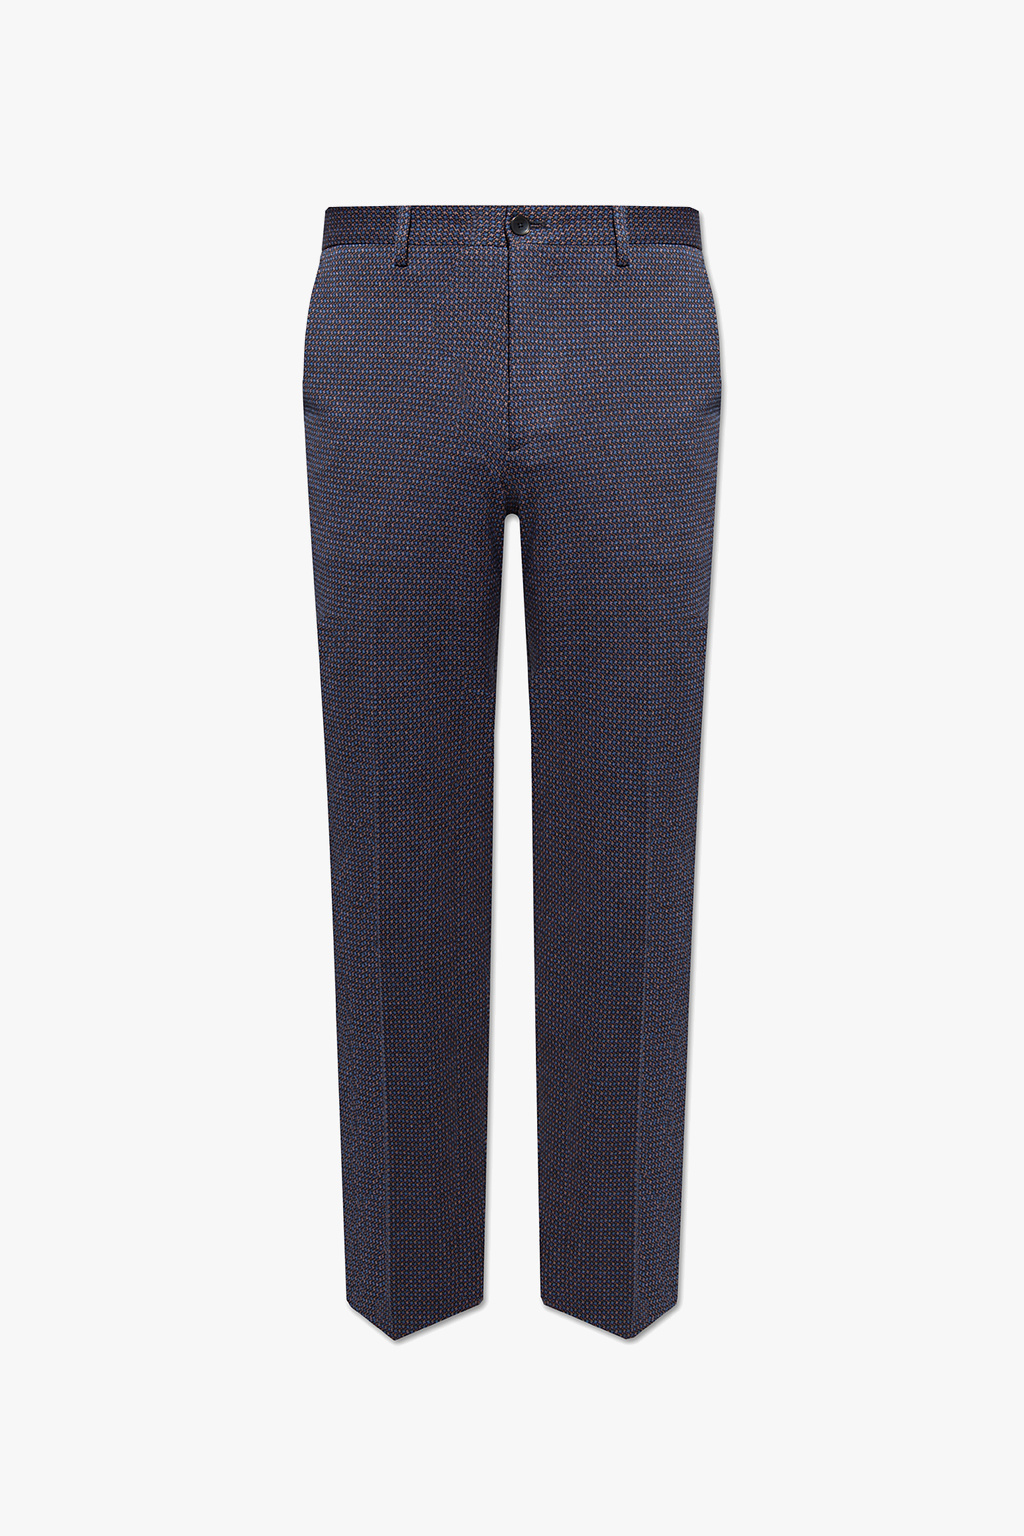 Etro Jacquard trousers